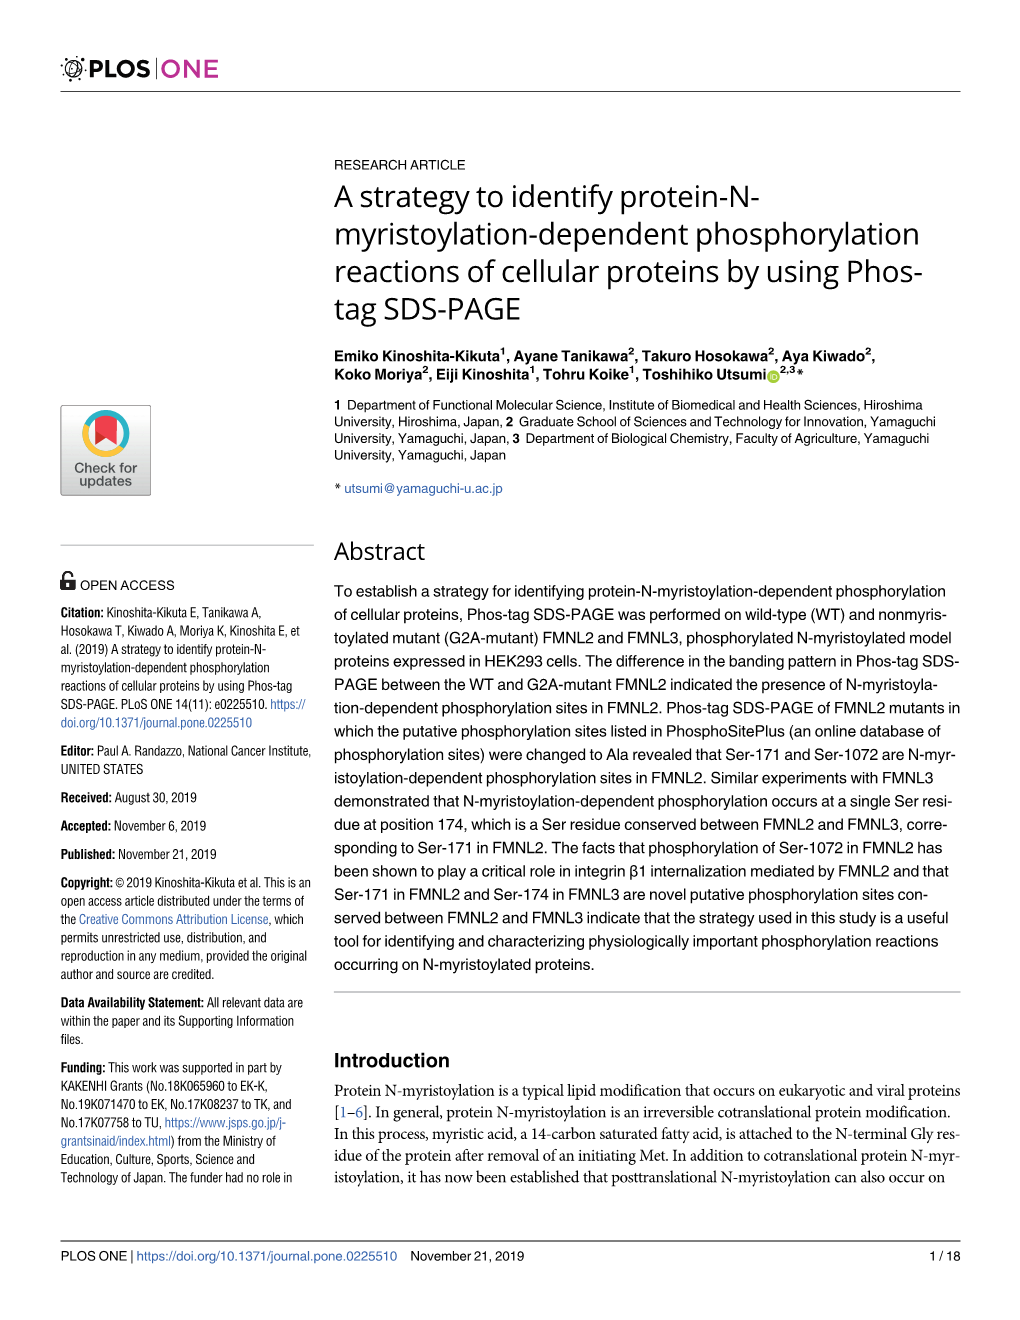 A Strategy to Identify Protein-N-Myristoylation-Dependent